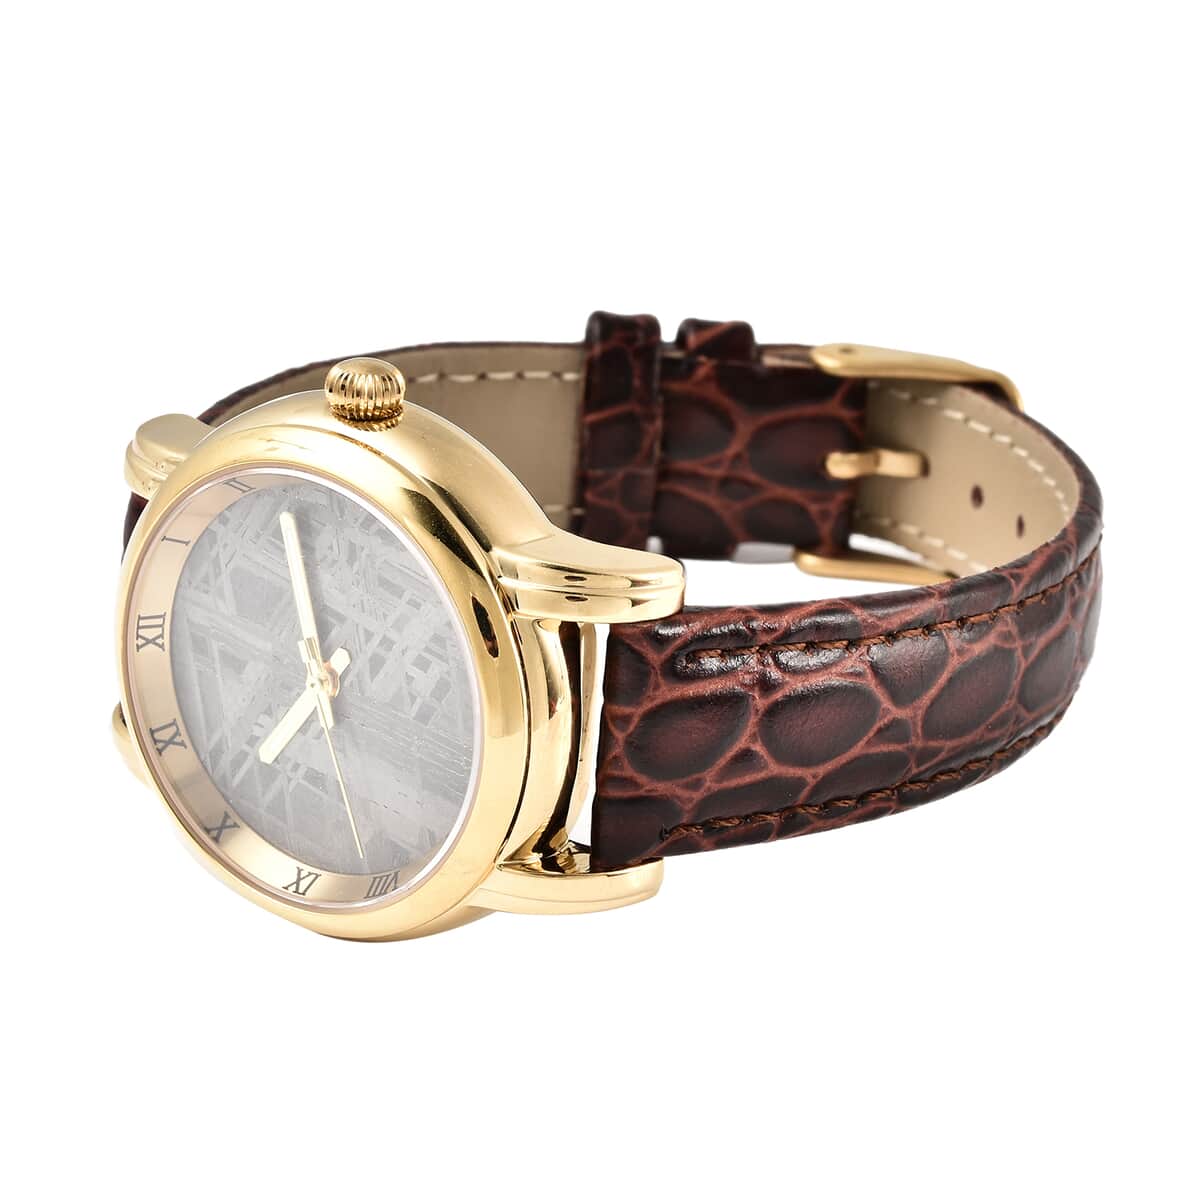 Eon 1962 Swiss Movement Watch with Marvelous Meteorite Dial & Dark Brown Leather Strap, Designer Gemstone Watch, Analog Luxury Wristwatch image number 3